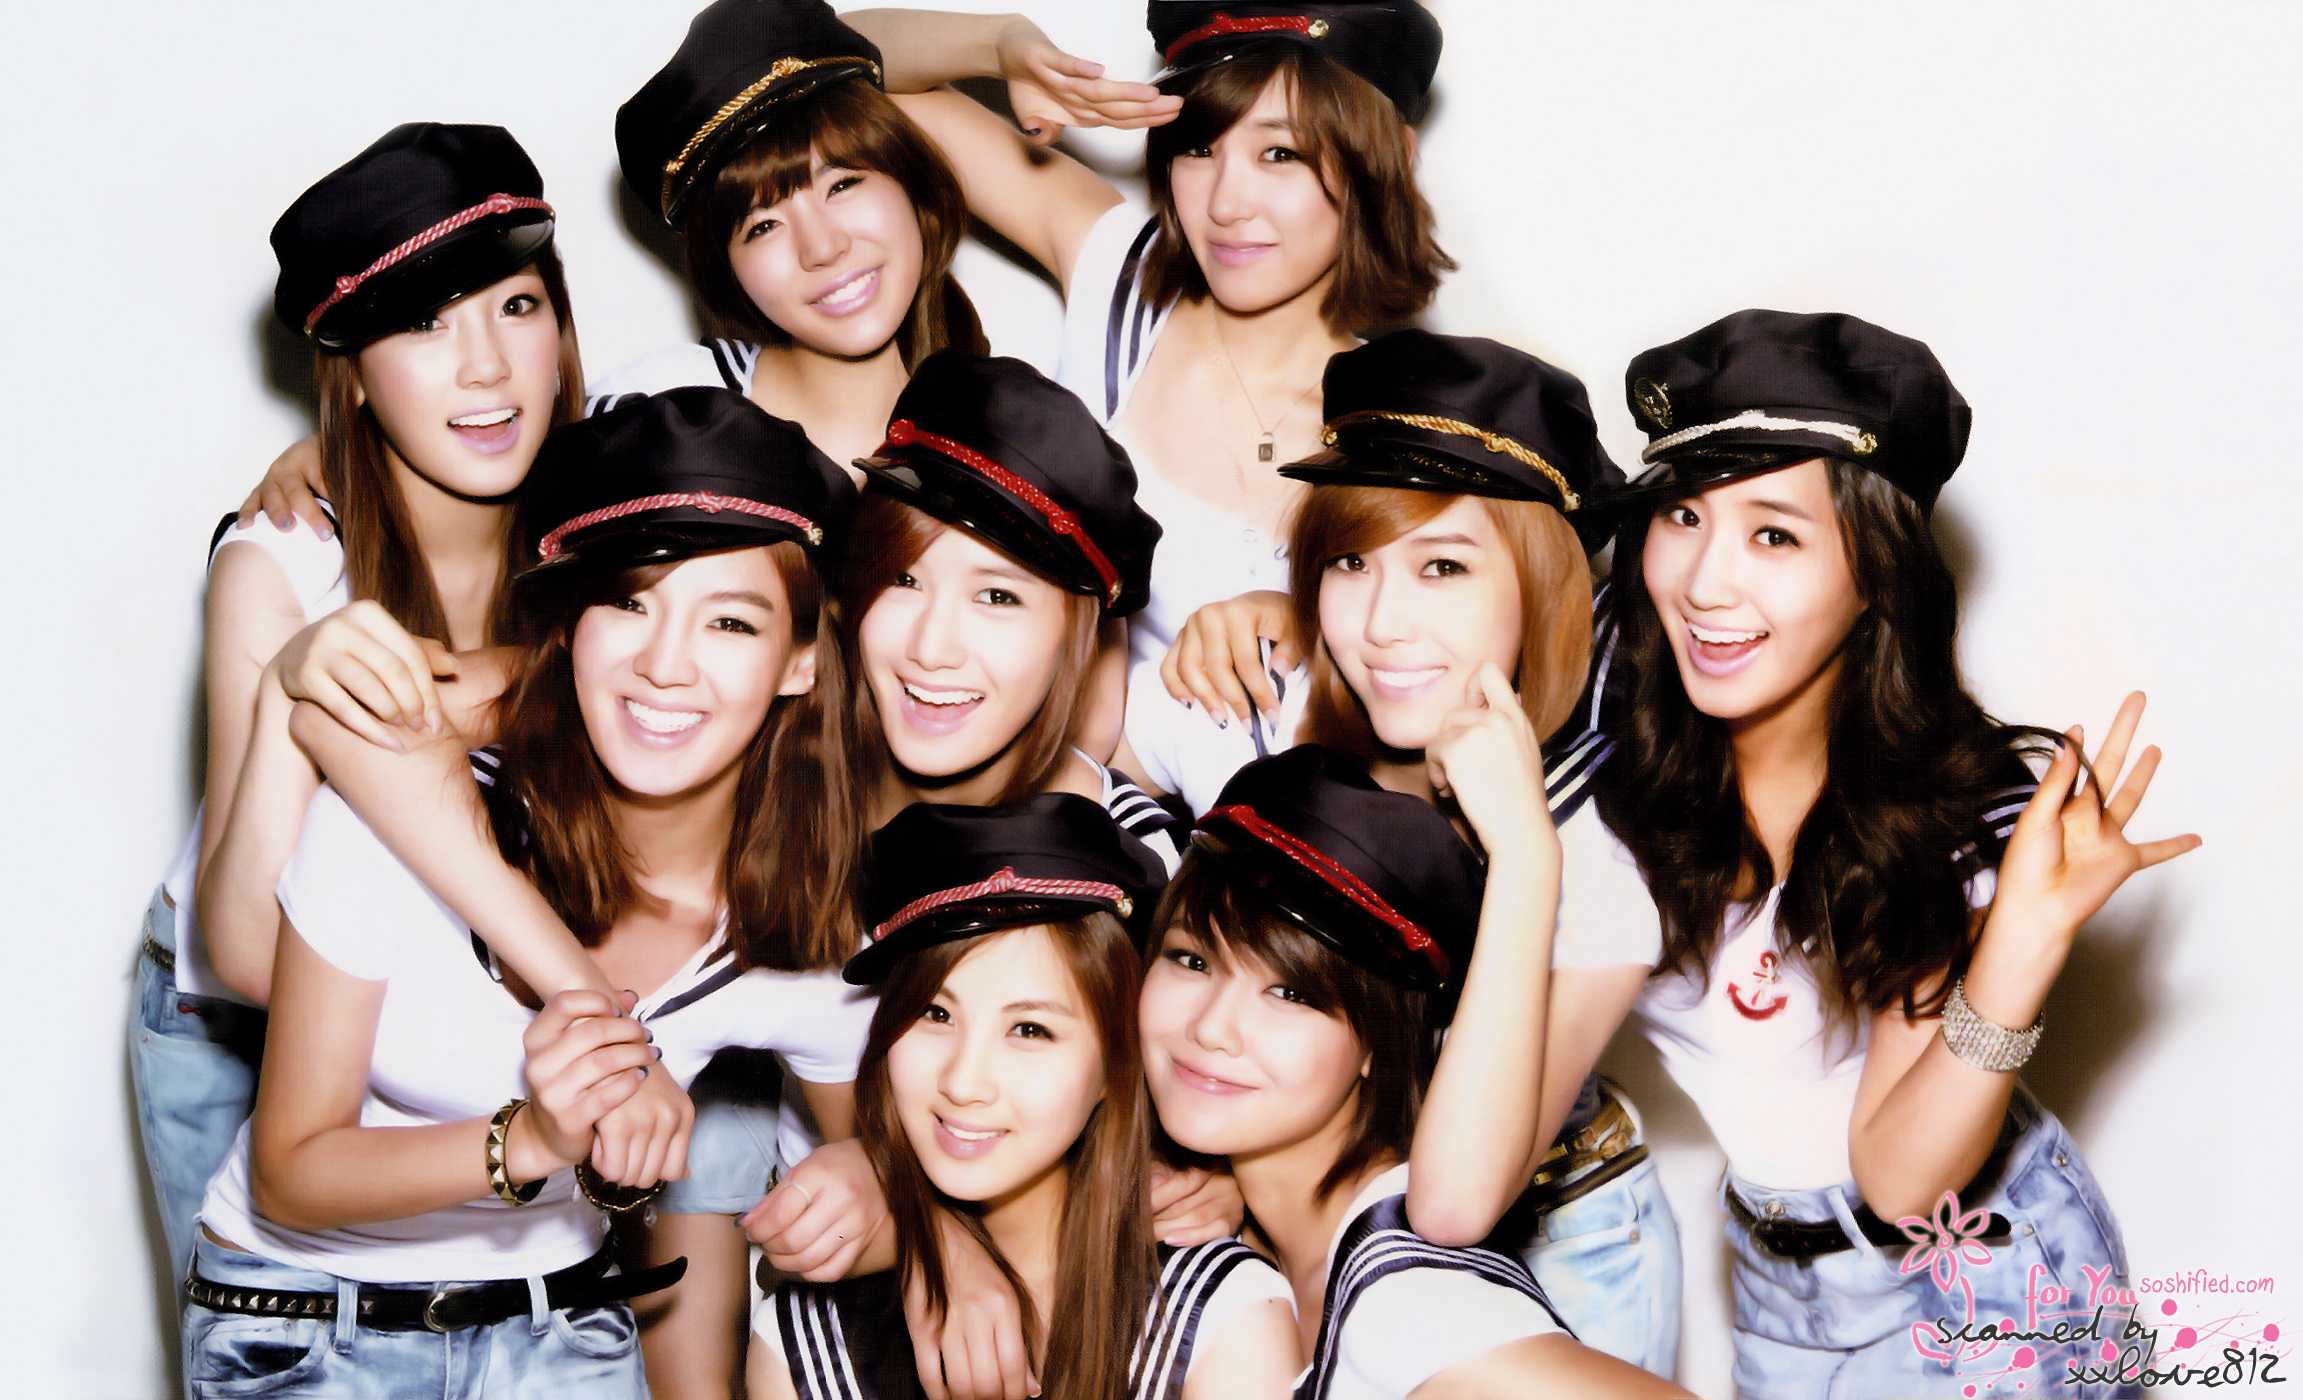 My top 10 favorite SNSD ballad songs - Girls Generation/SNSD - Fanpop